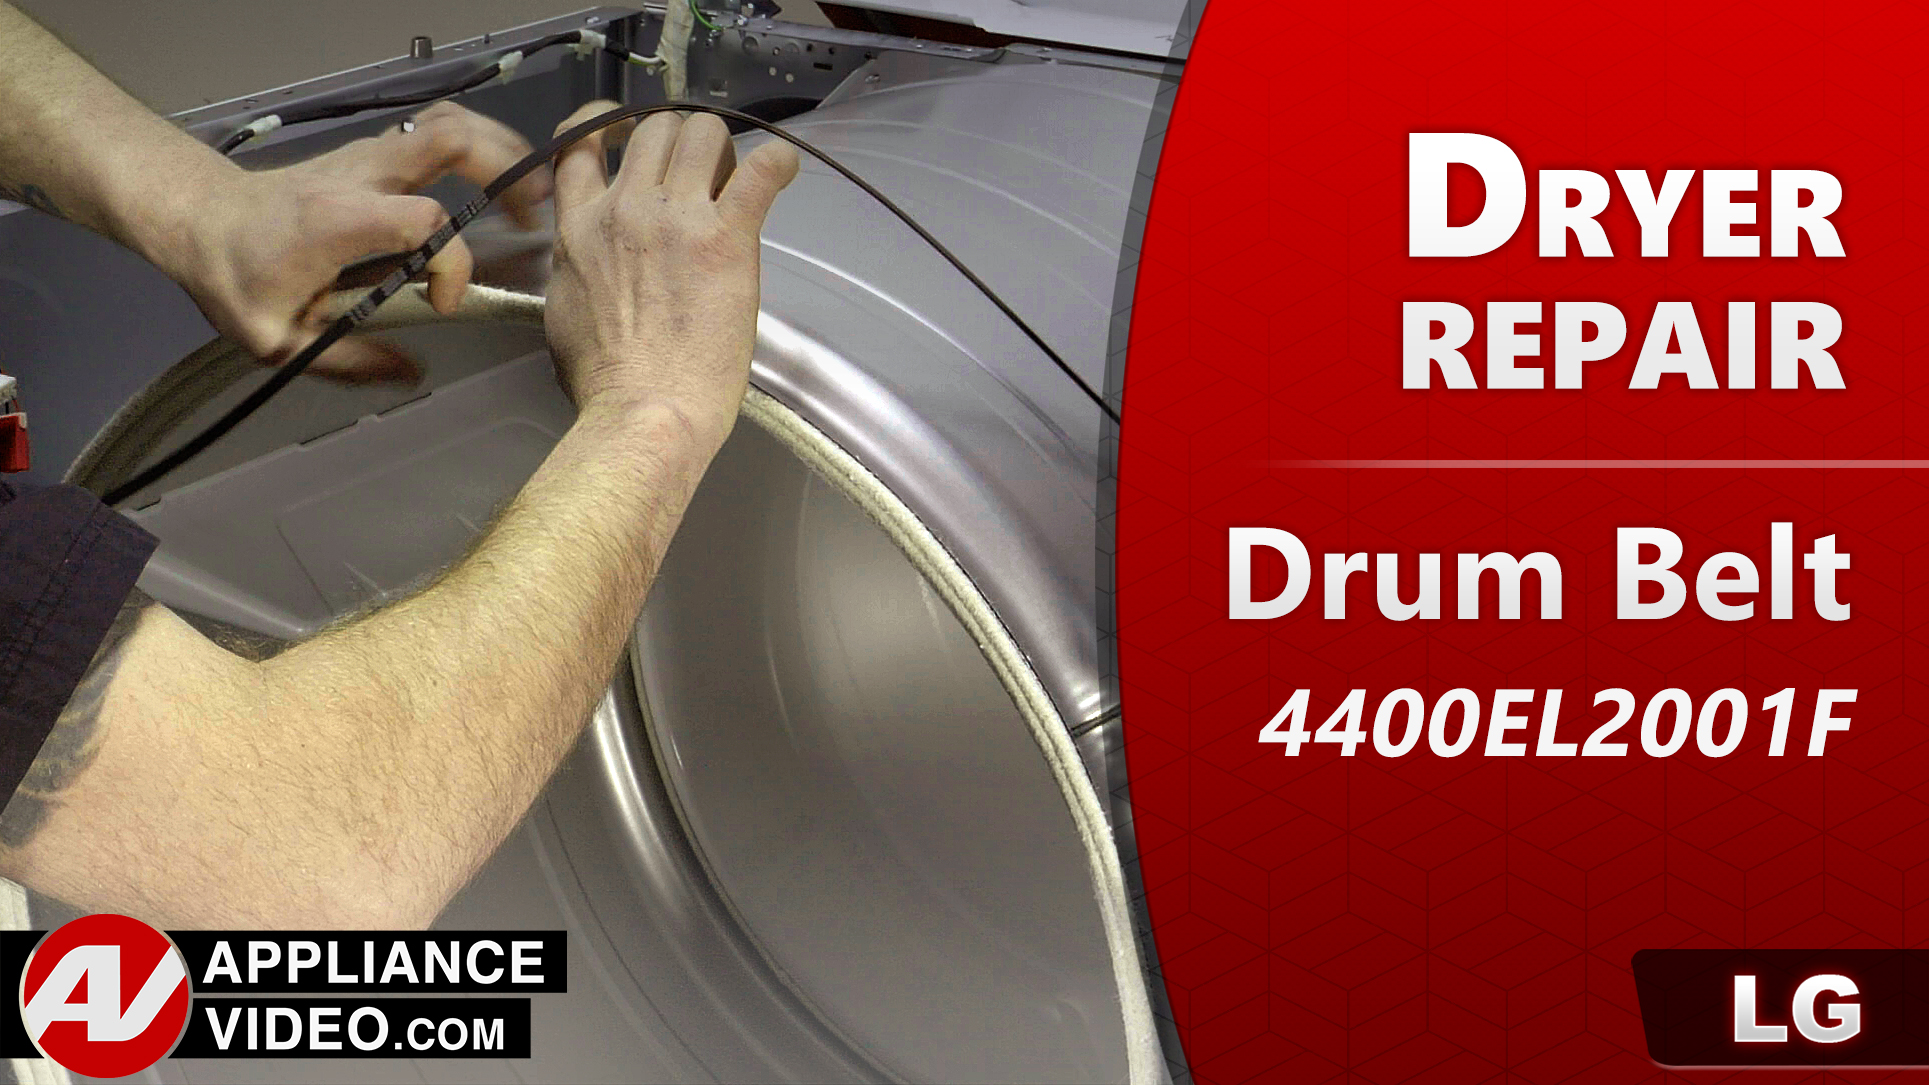 LG DLG7301WE Dryer – Will not start – Drum Belt